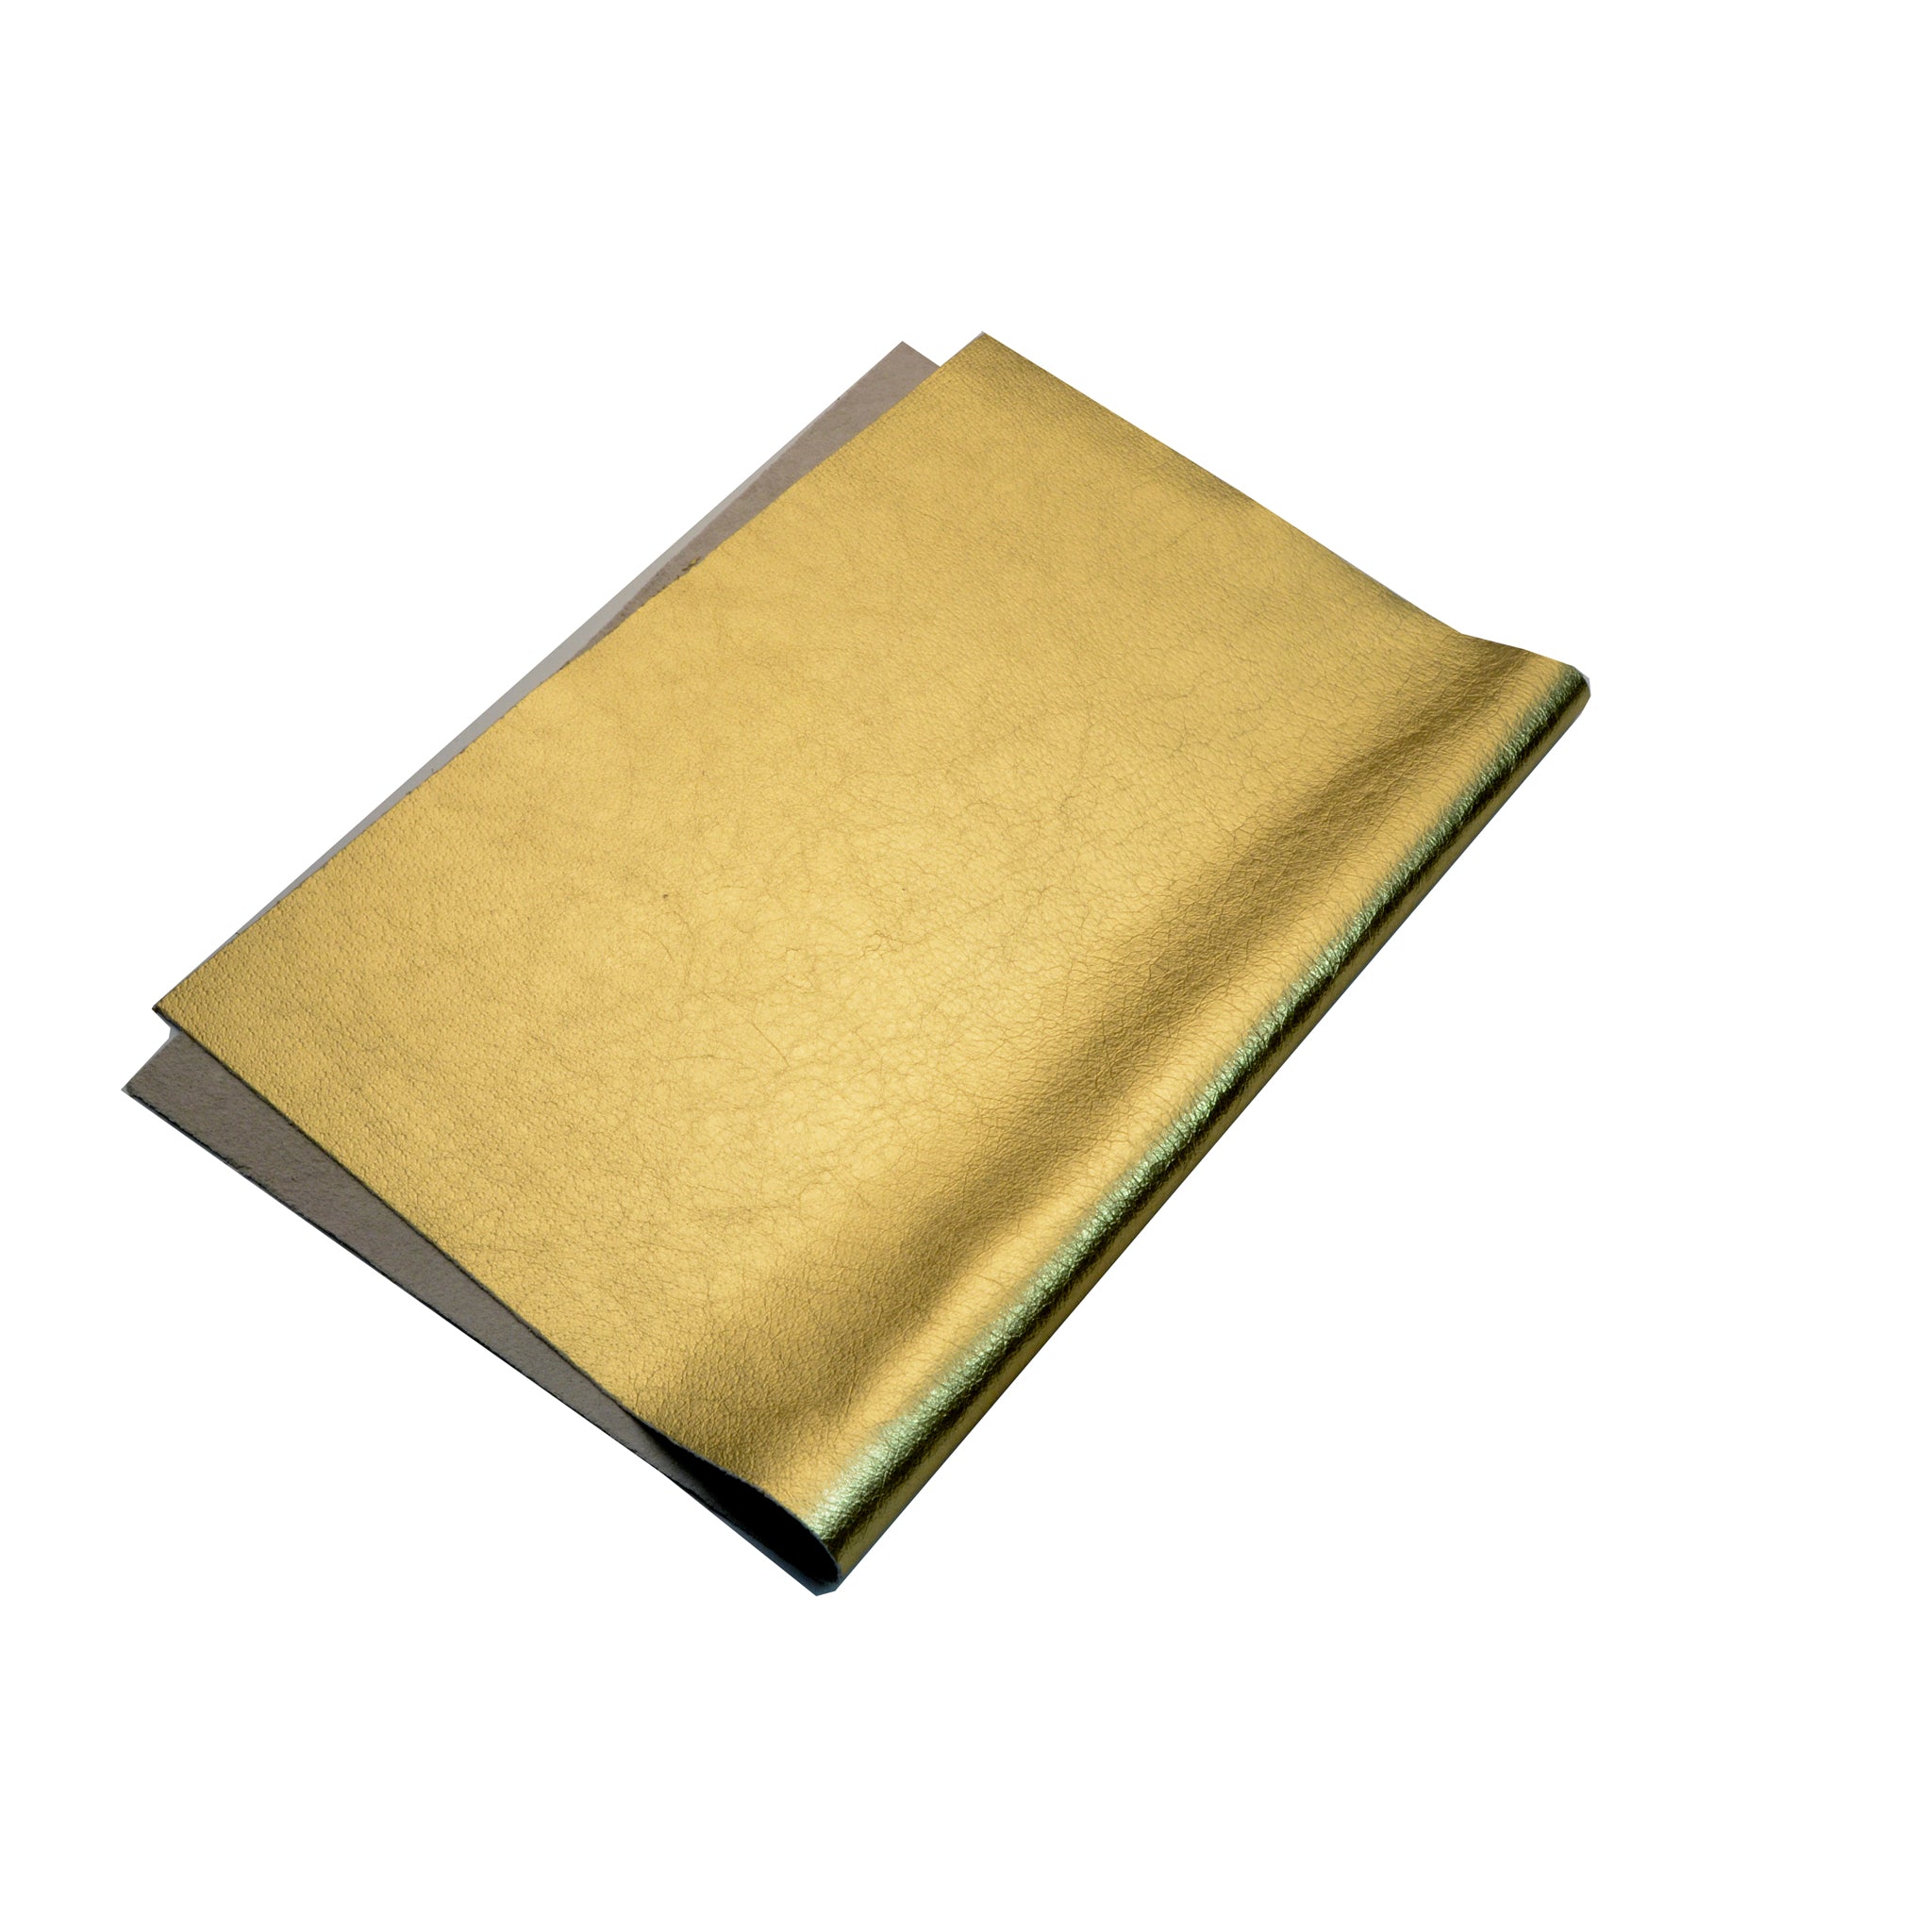 Gold Metallic Foil Leather 